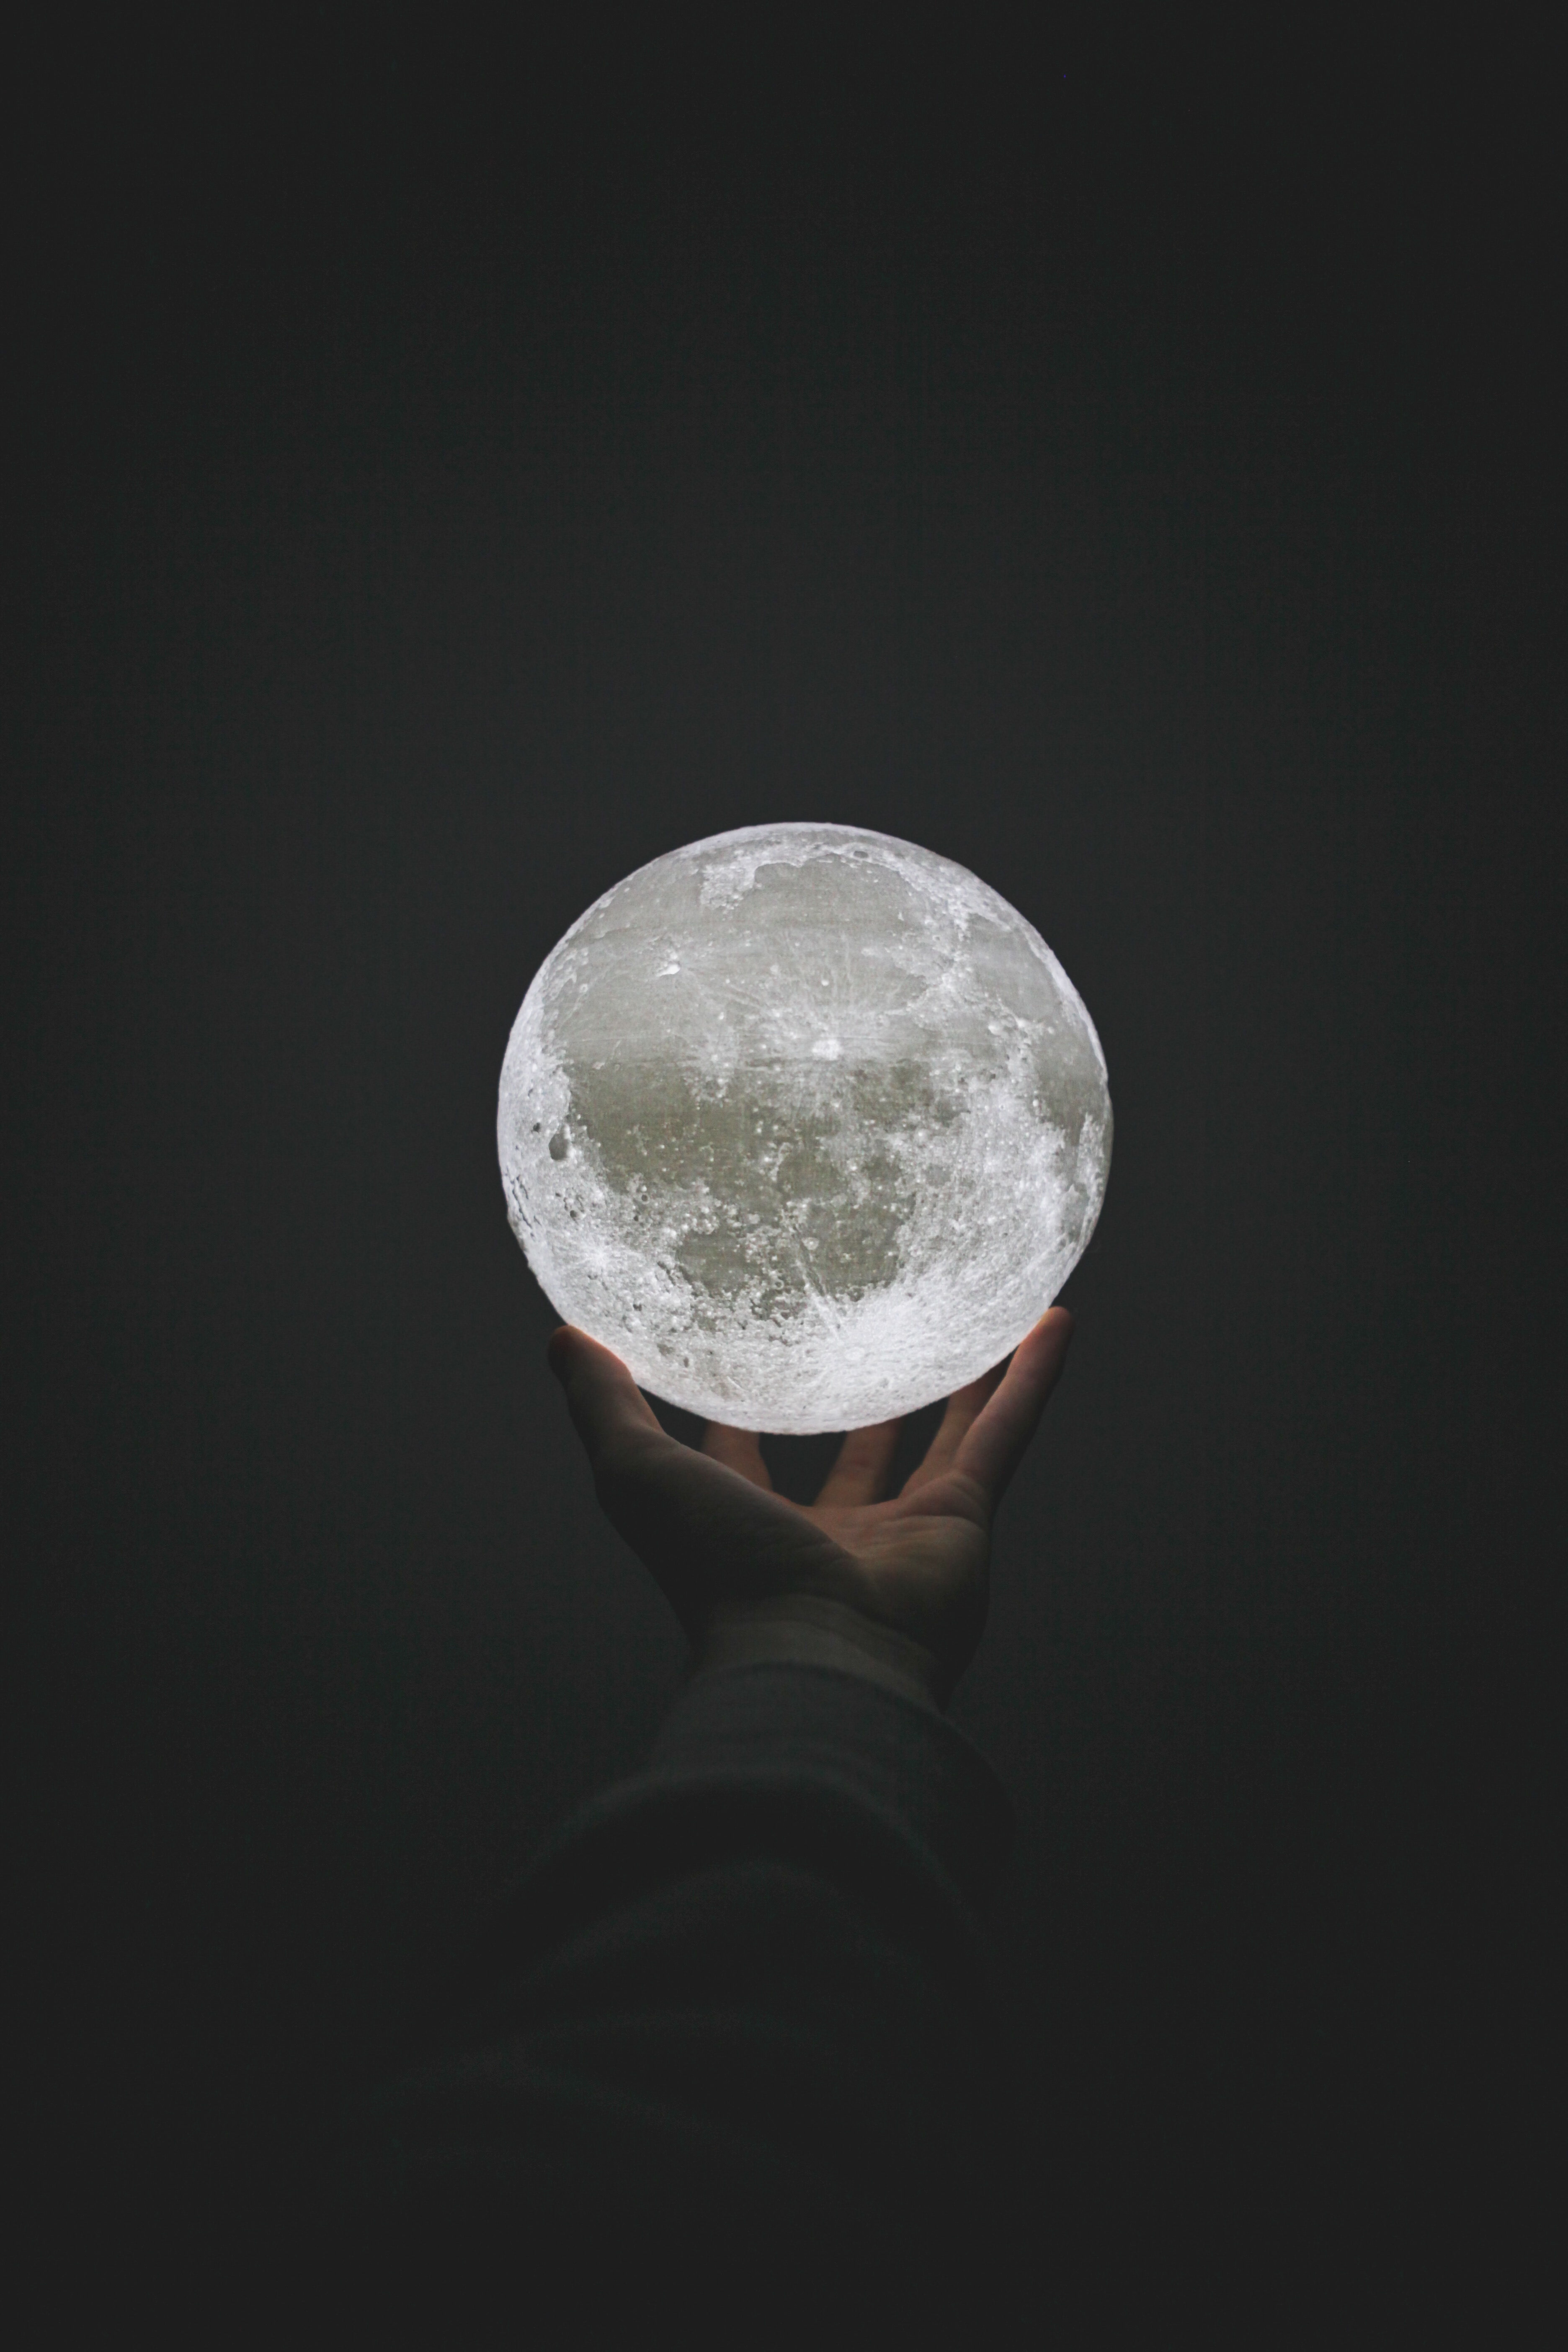 sphere, hand, dark, moon, ball, glow